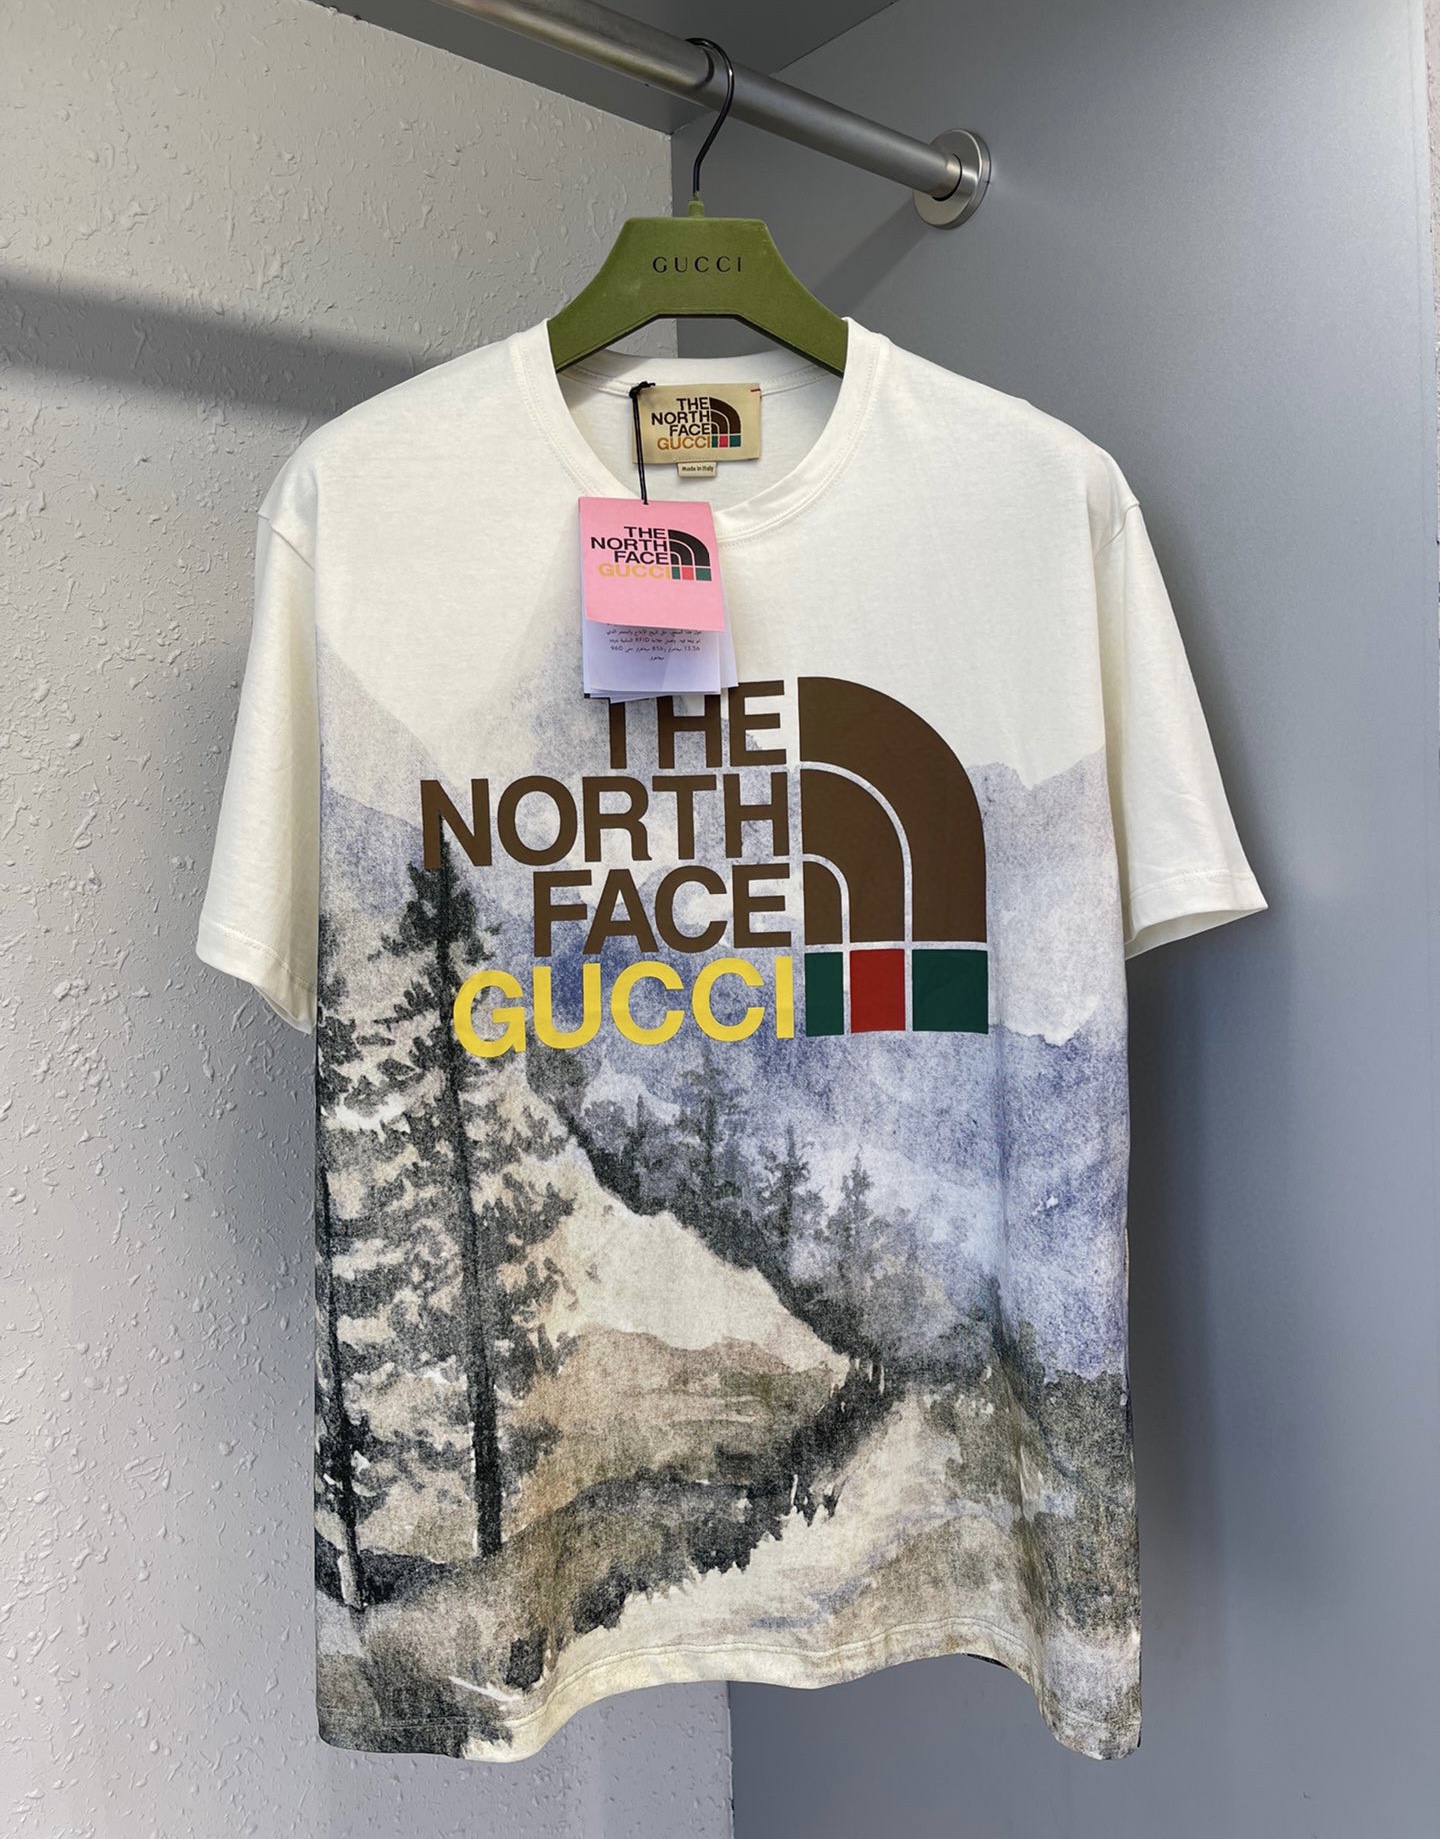 The North Face x Gucci T-shirt – billionairemart